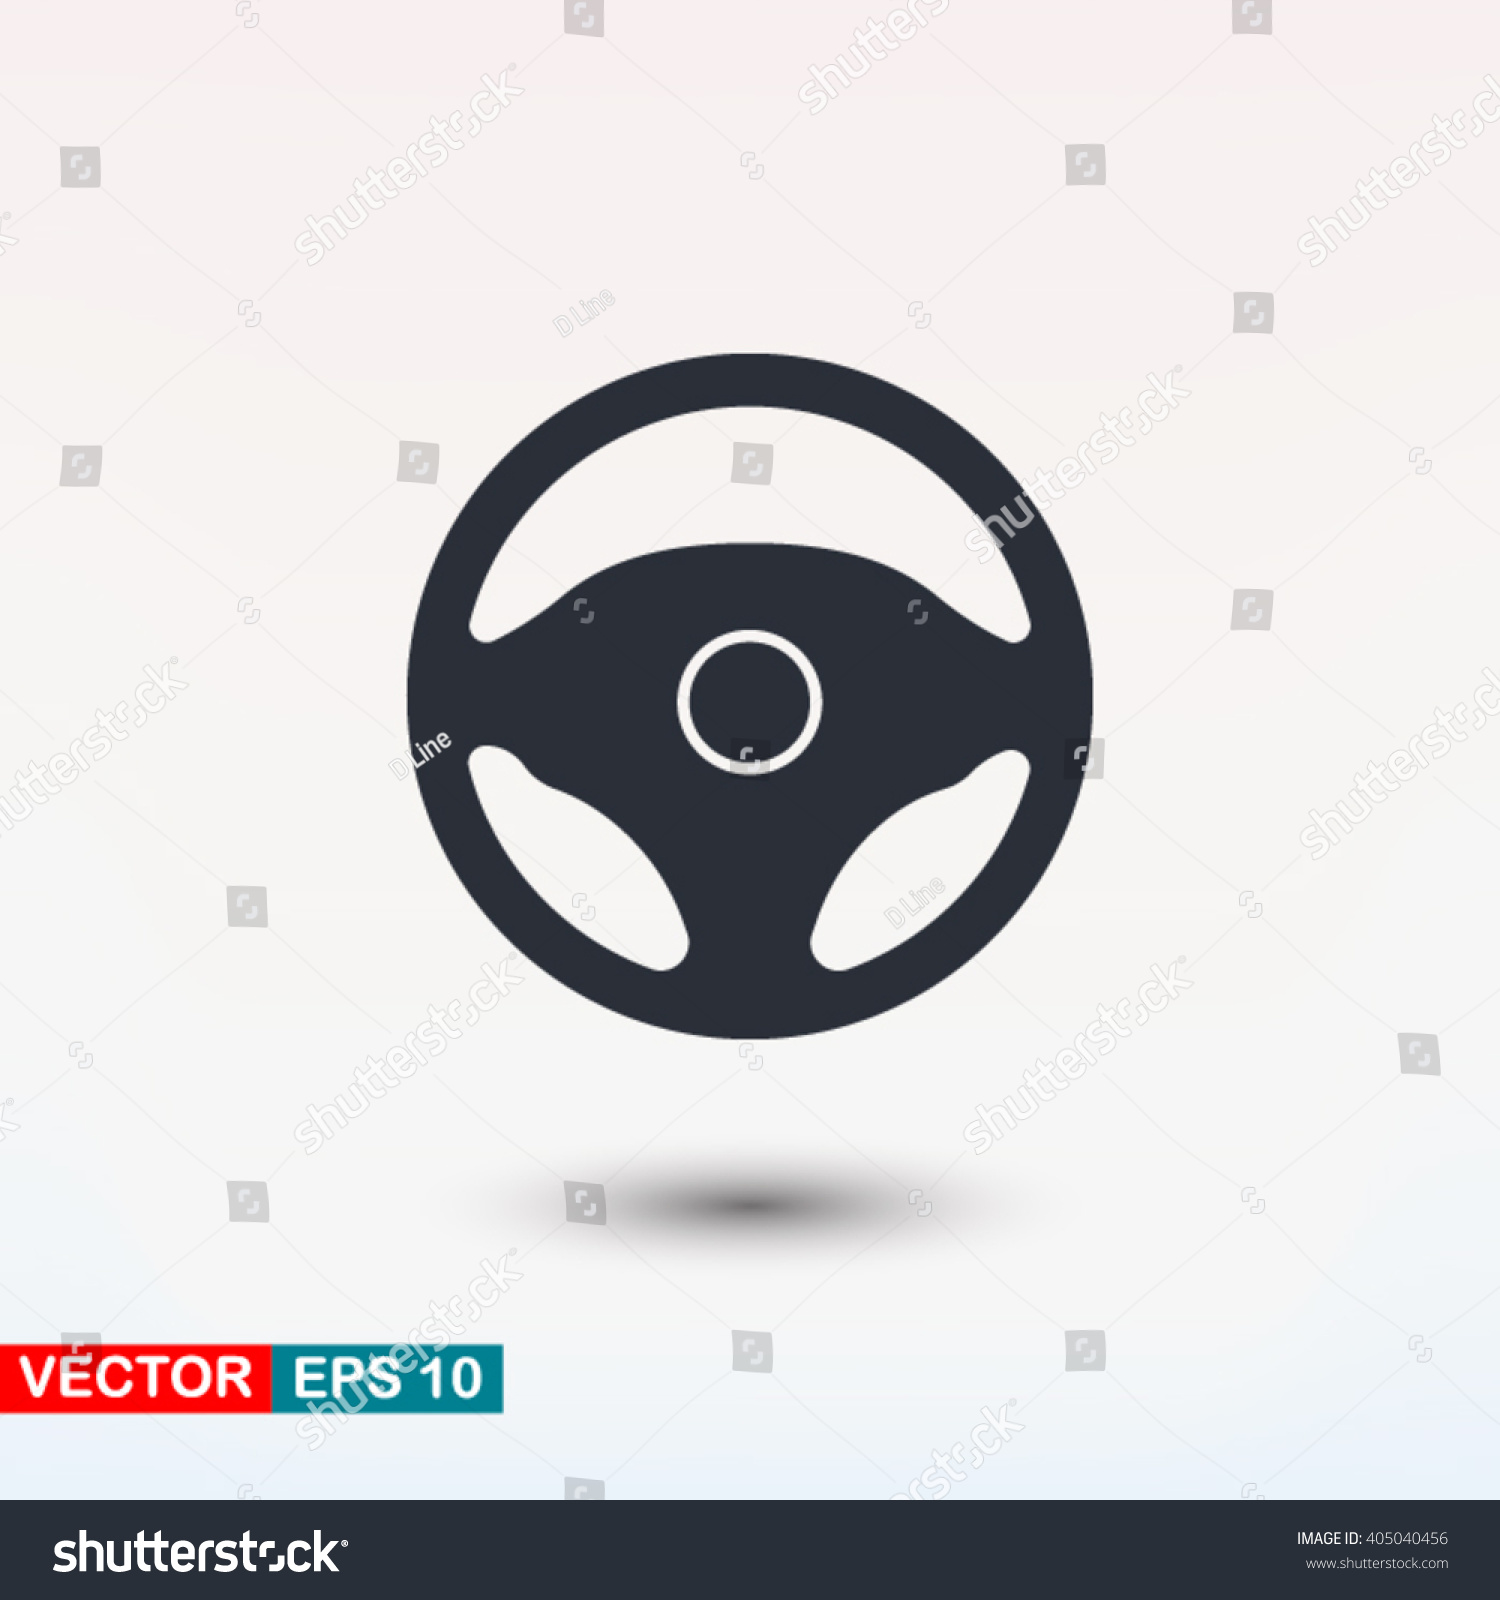 Steering Wheel Icon Stock Vector 405040456 - Shutterstock